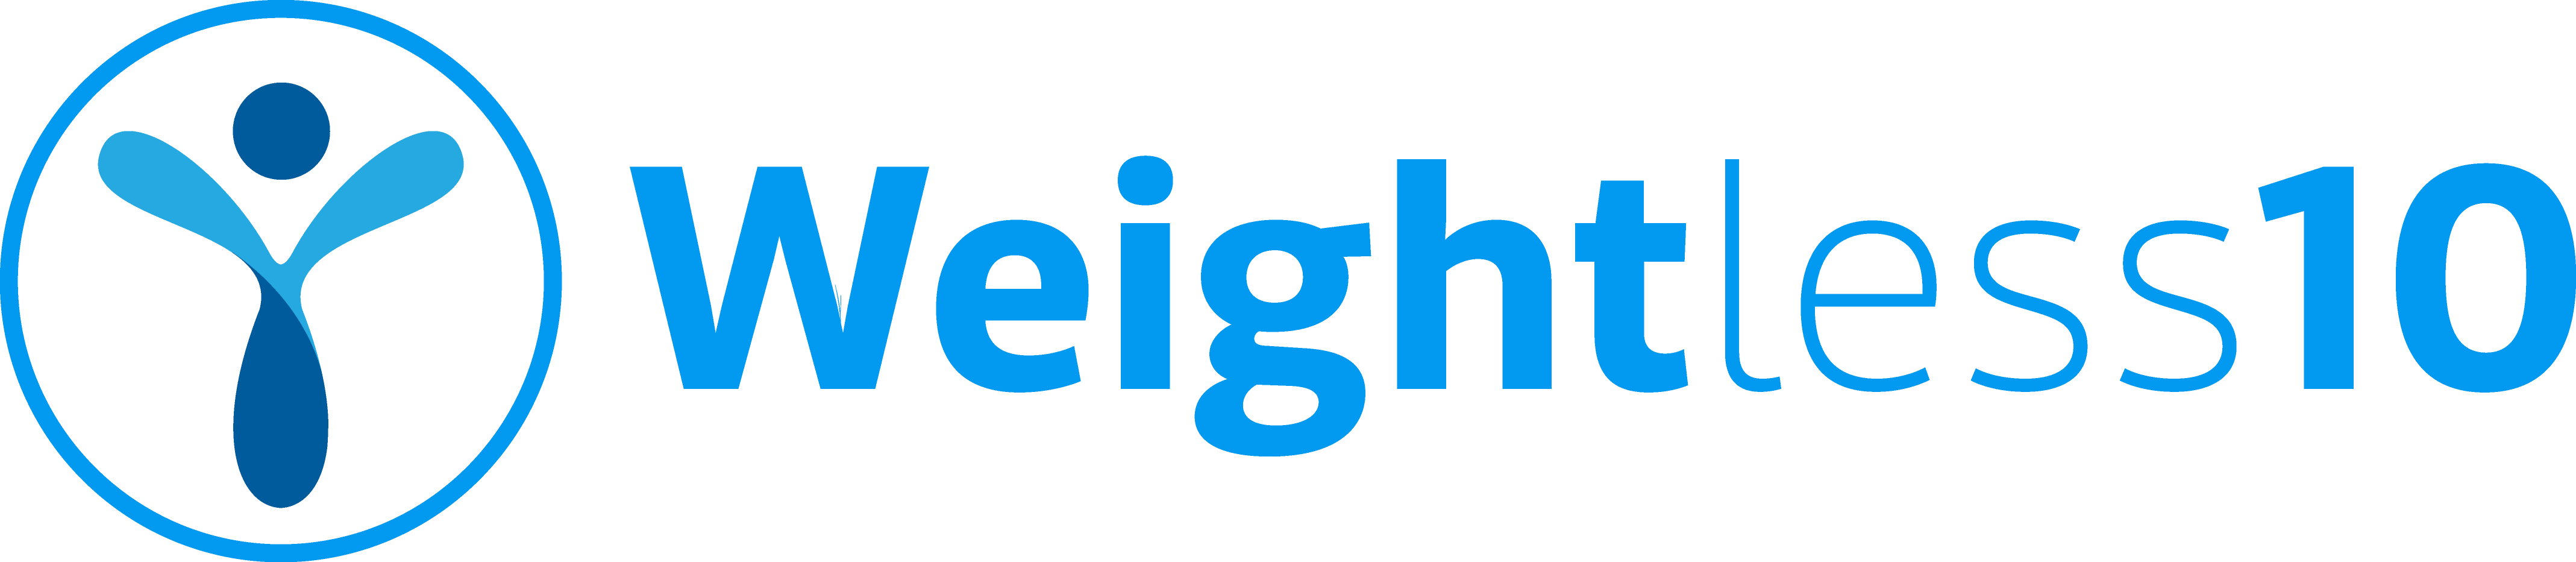 Weightless10 Blog